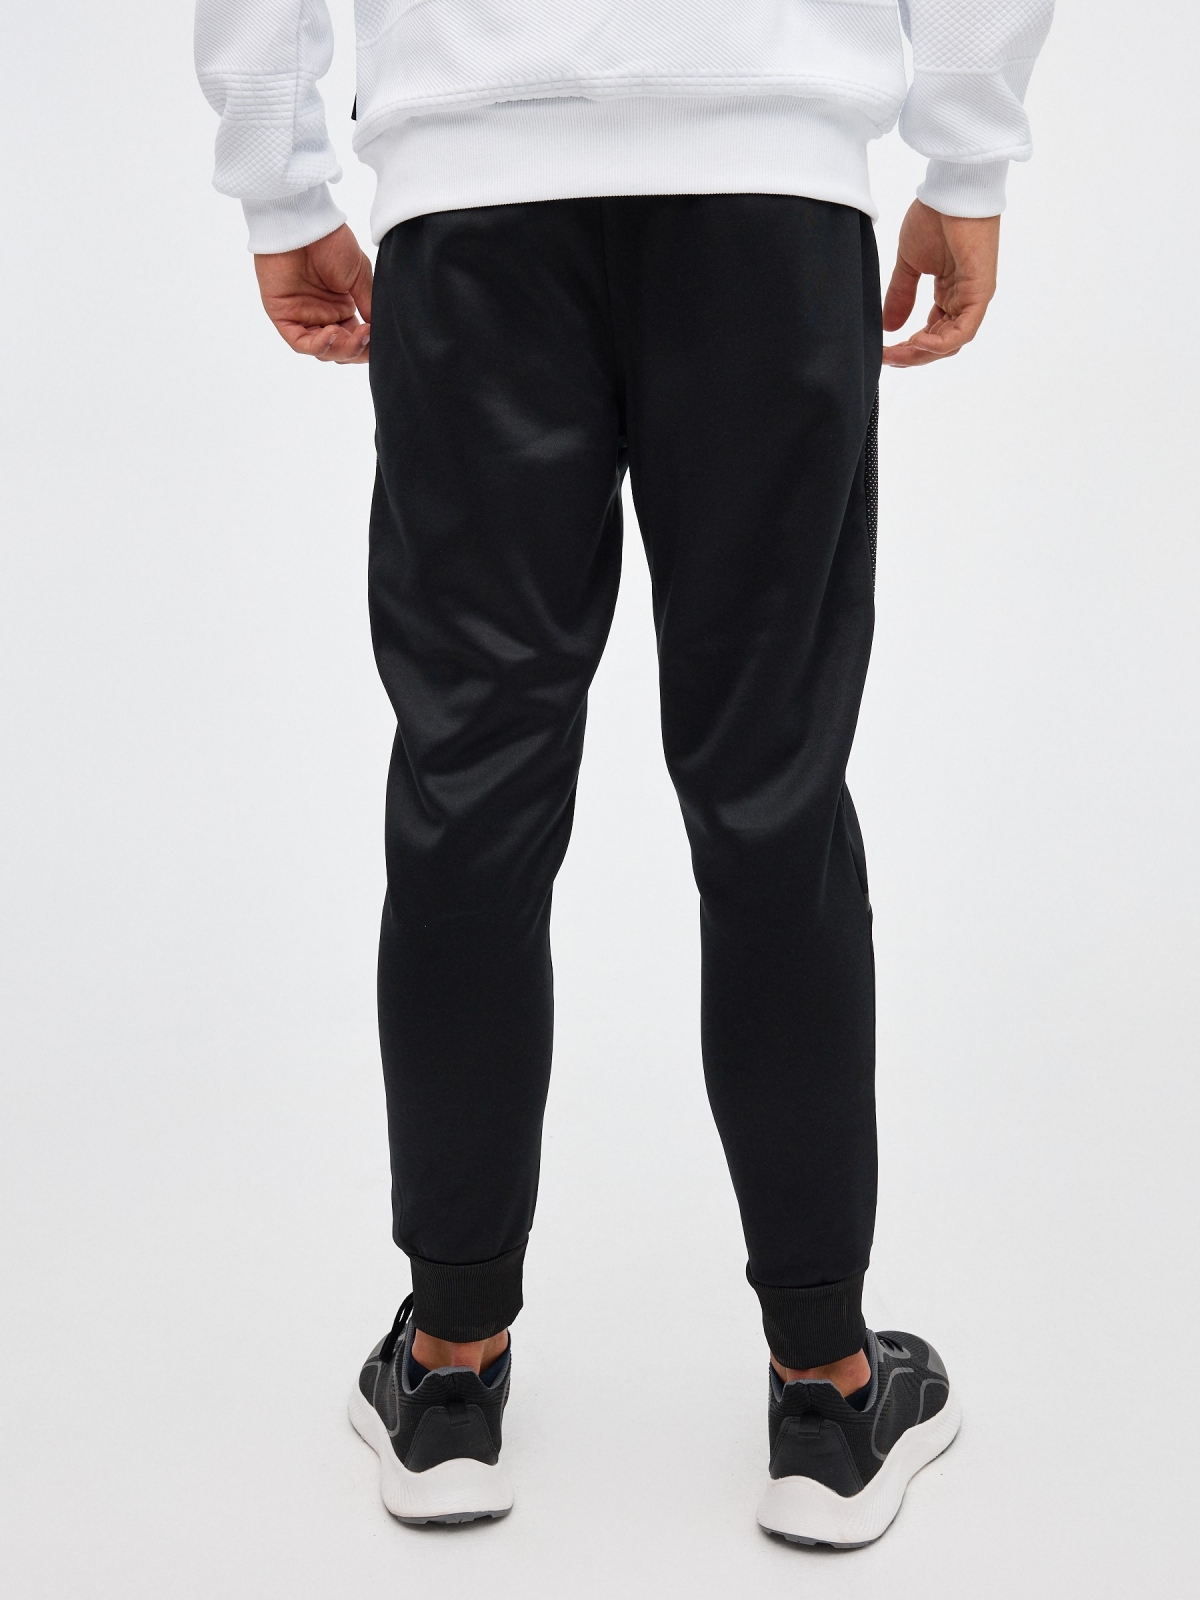 Black jogger pants black middle back view